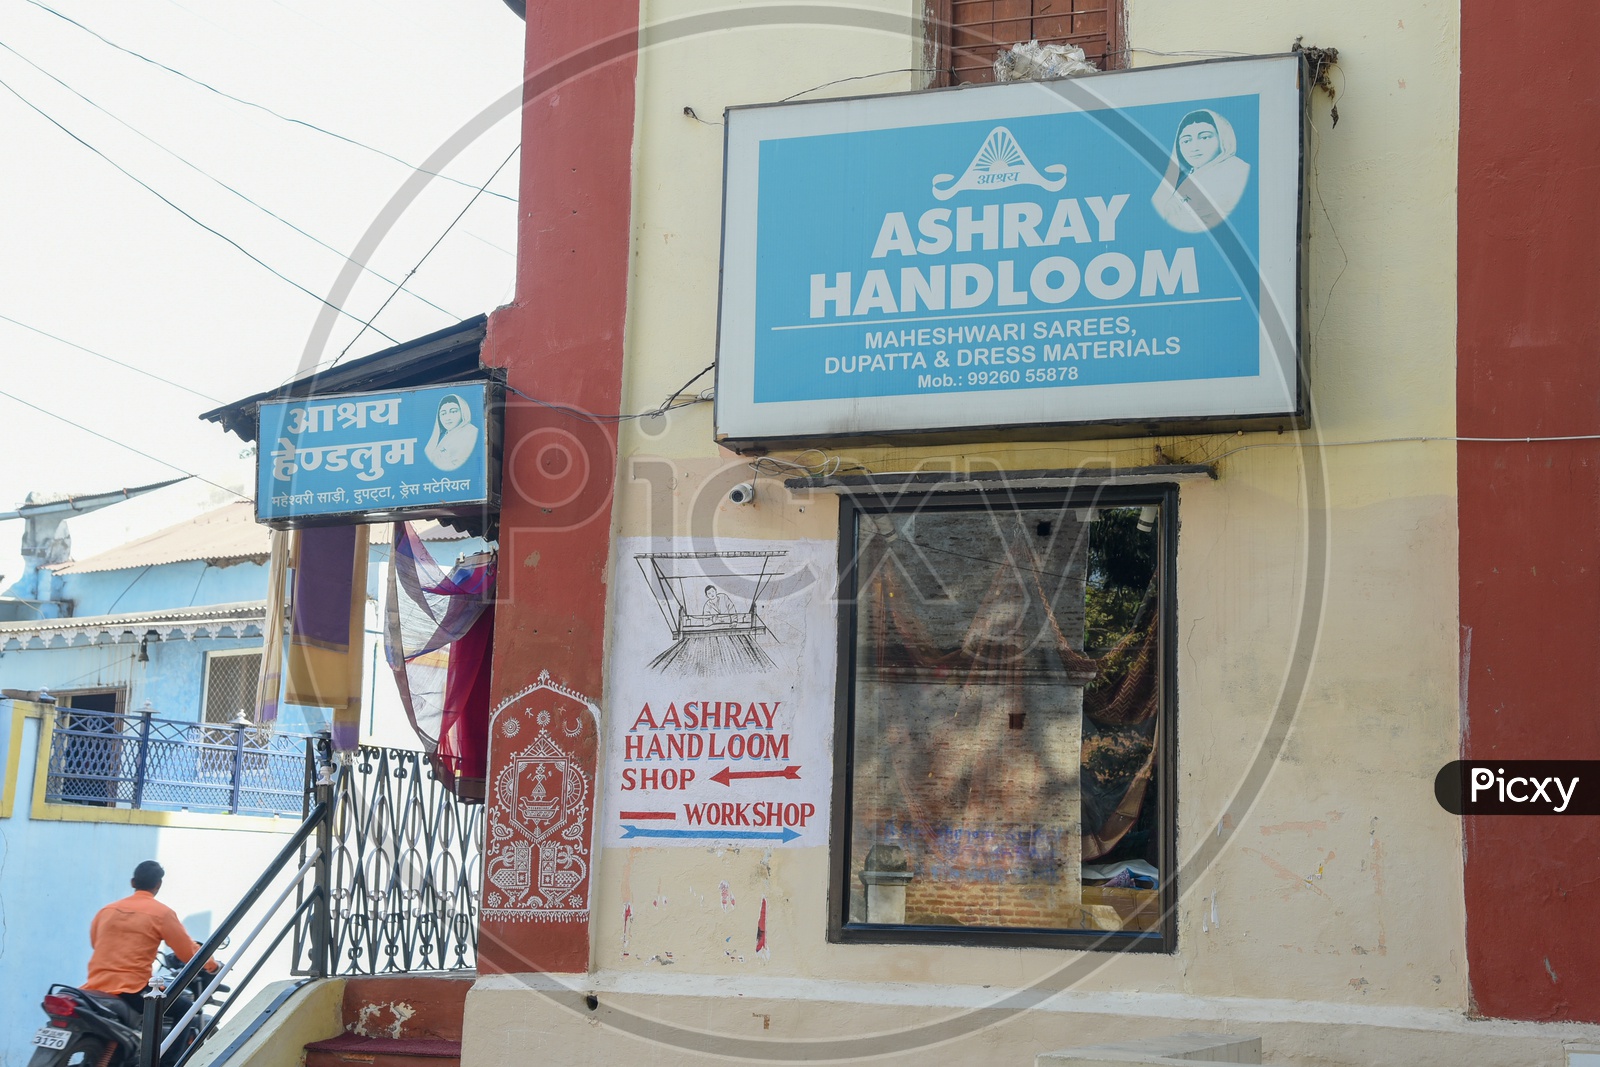 Ashray Handloom Store and Workshop